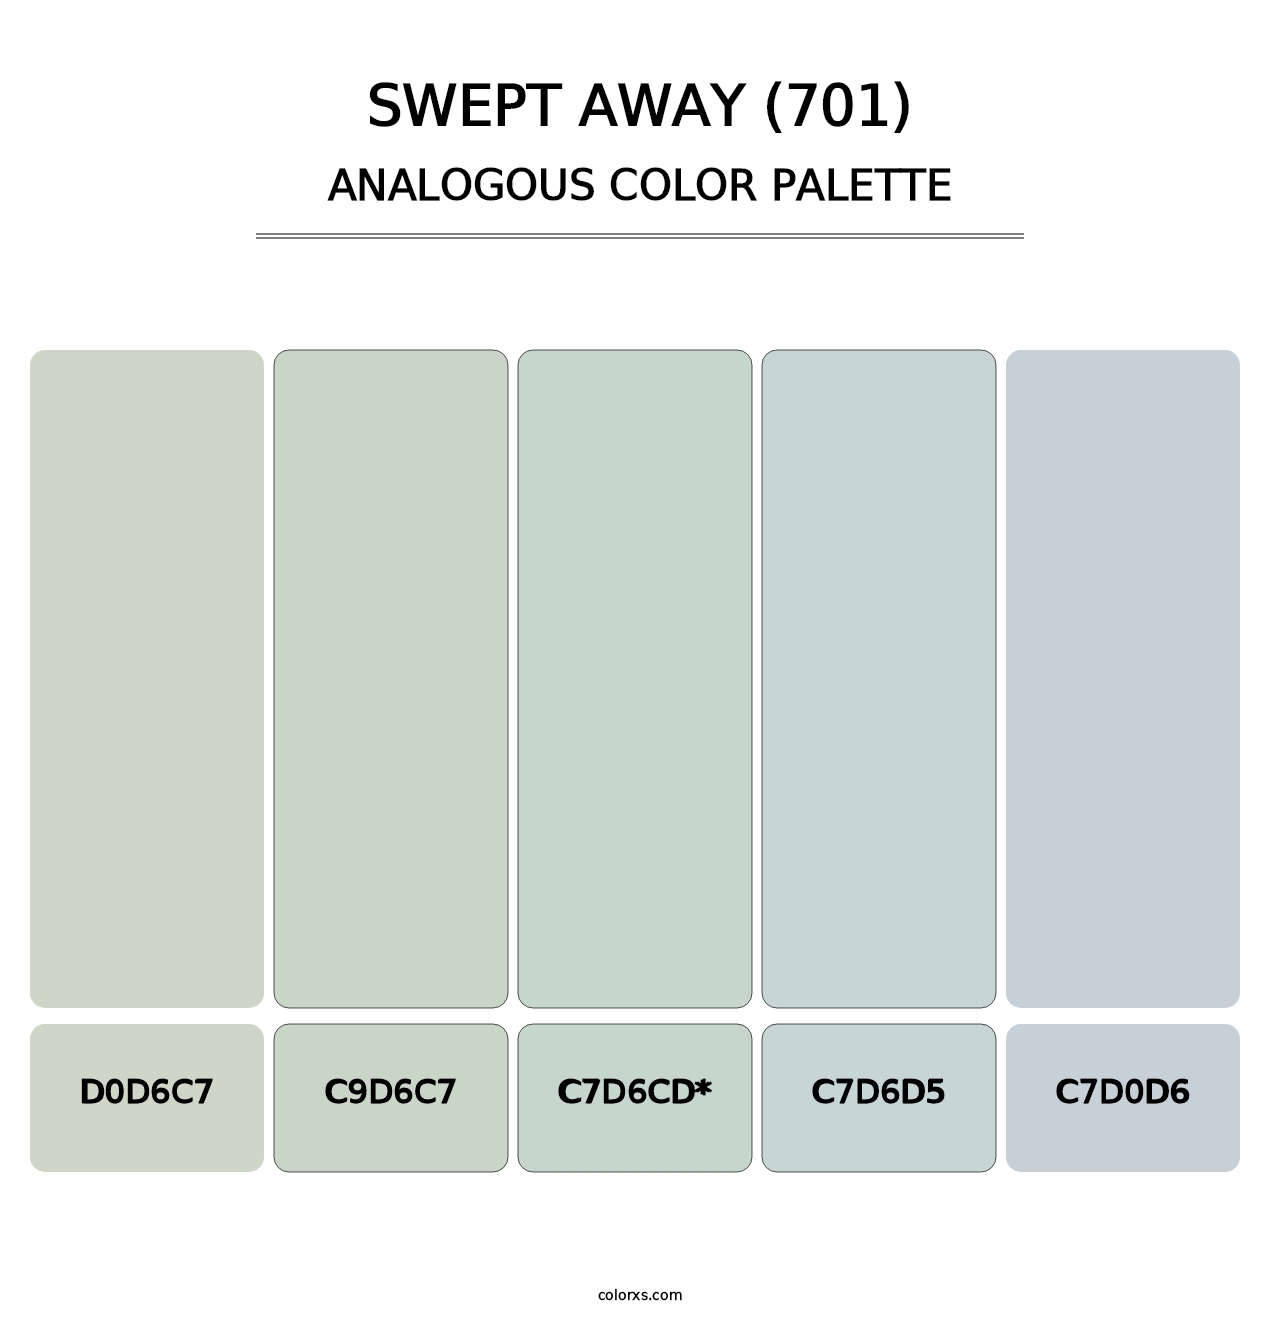 Swept Away (701) - Analogous Color Palette